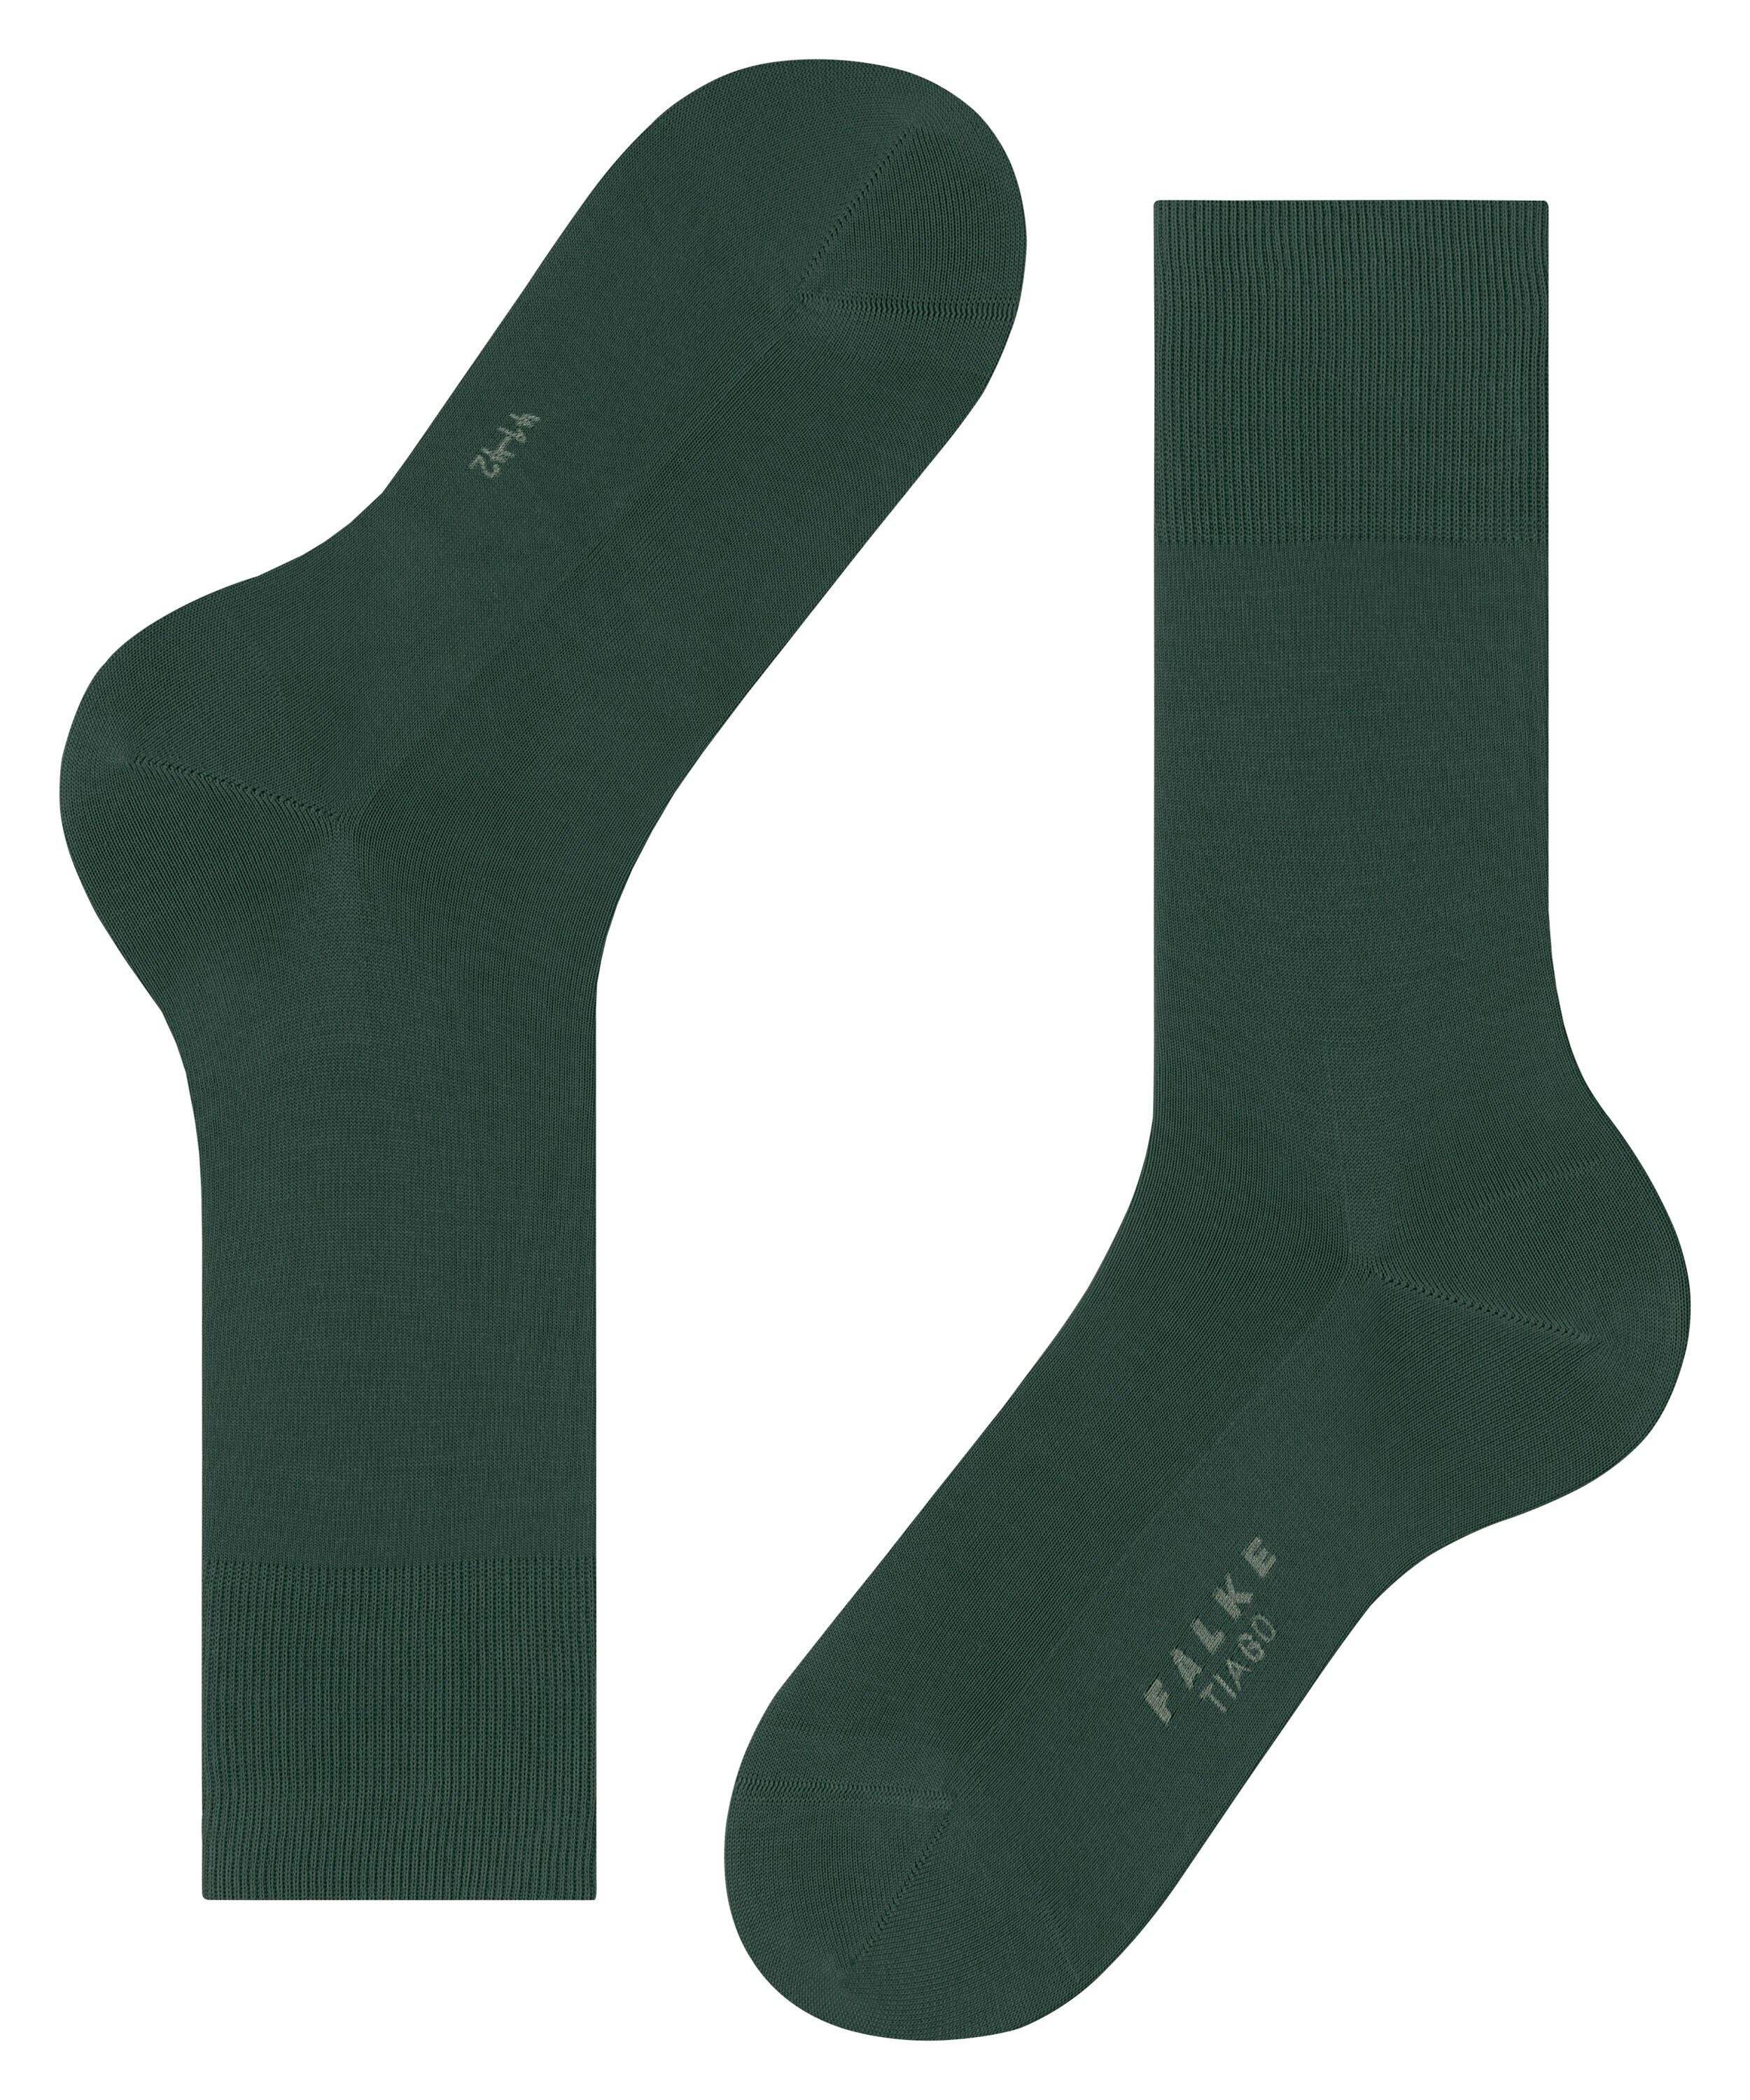 Tiago FALKE (7441) Socken (1-Paar) hunter green